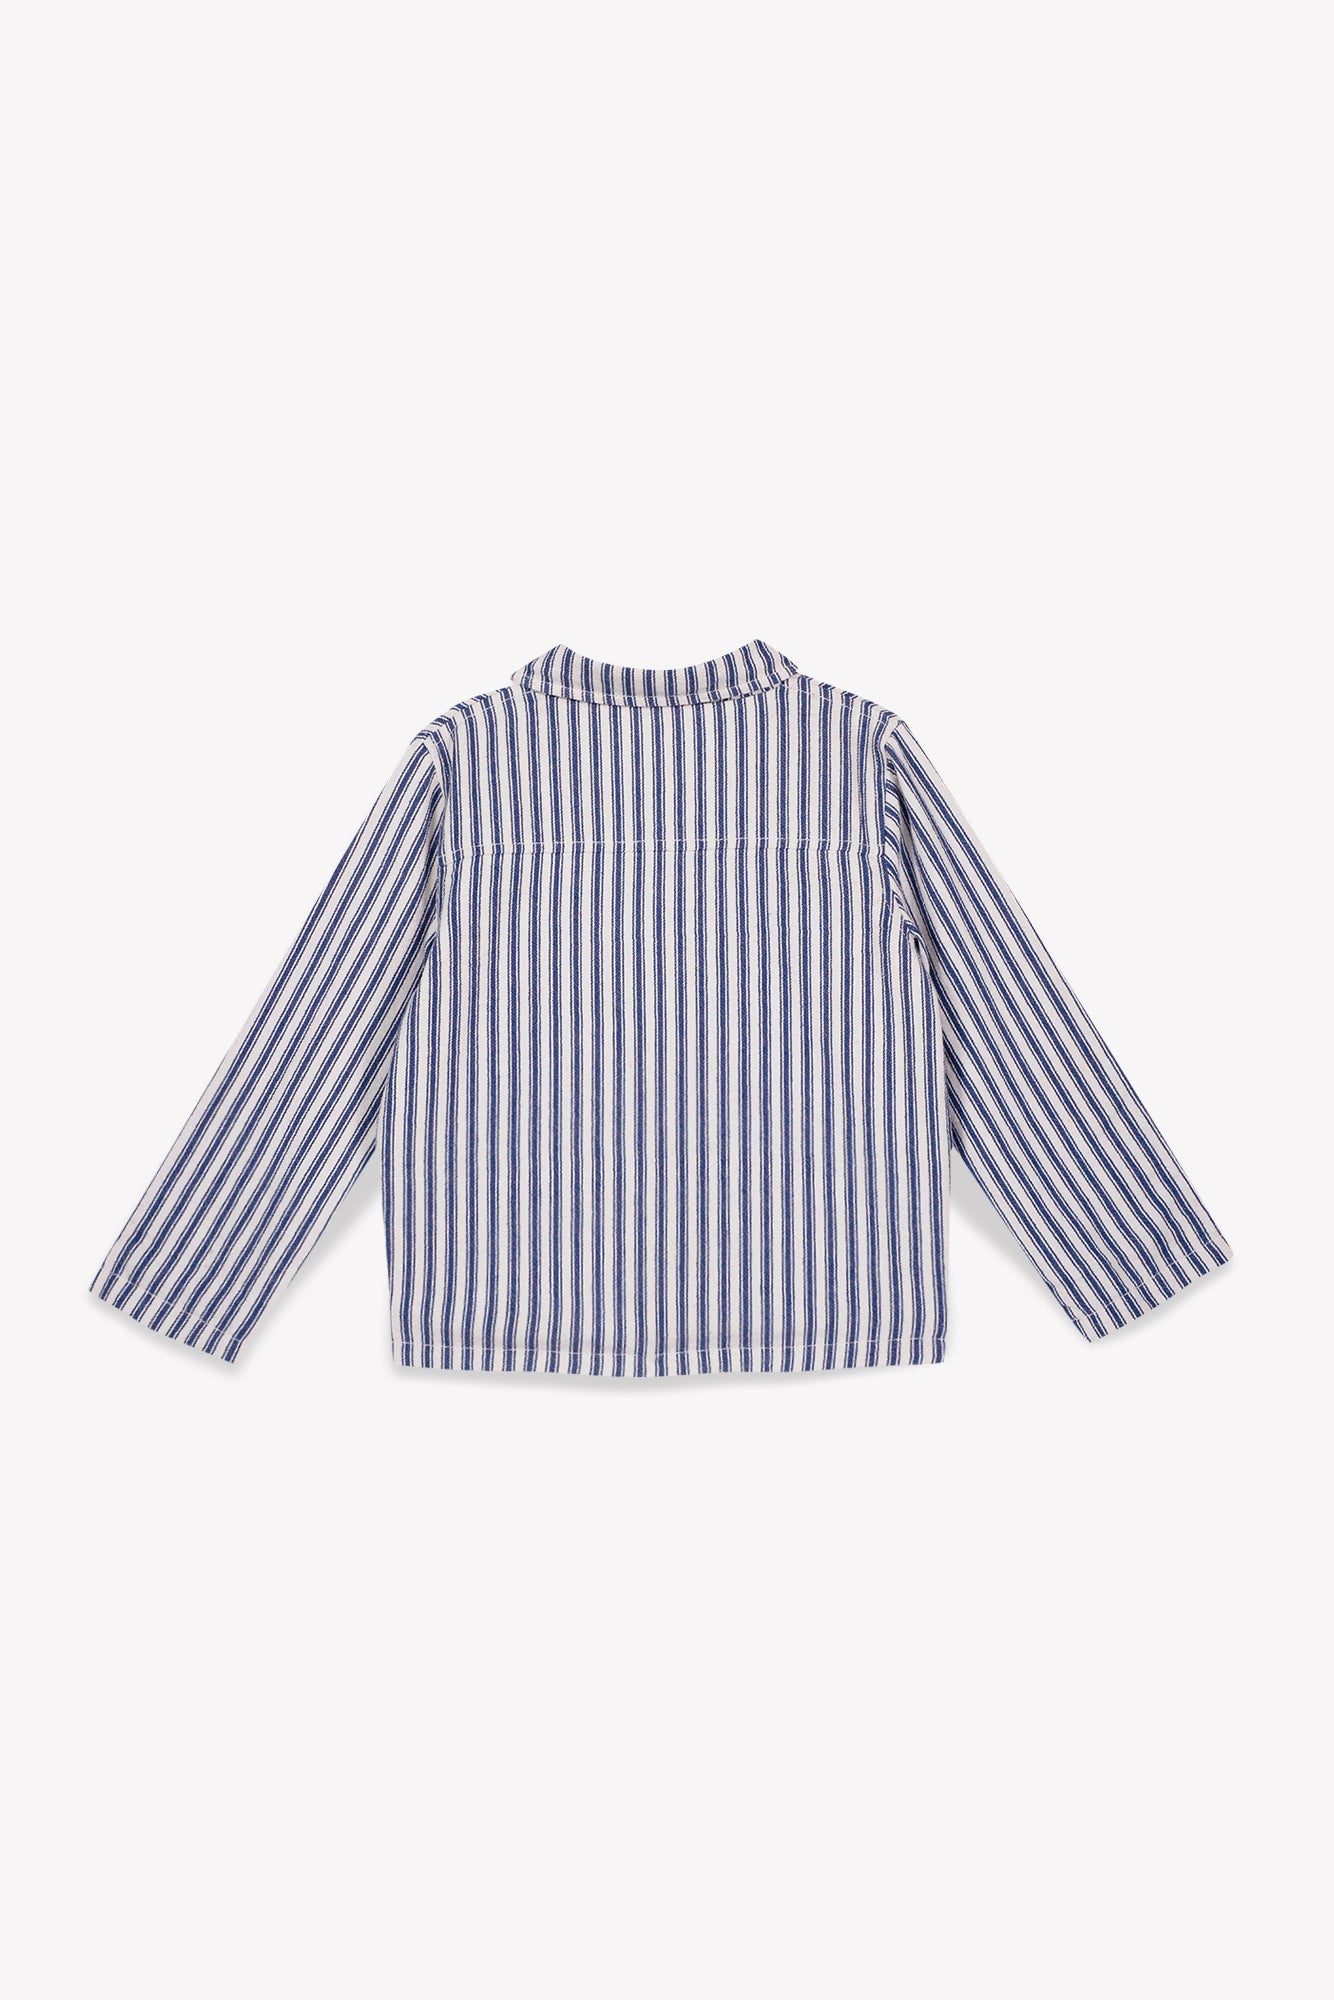 Jacket - Striped blue cotton twill